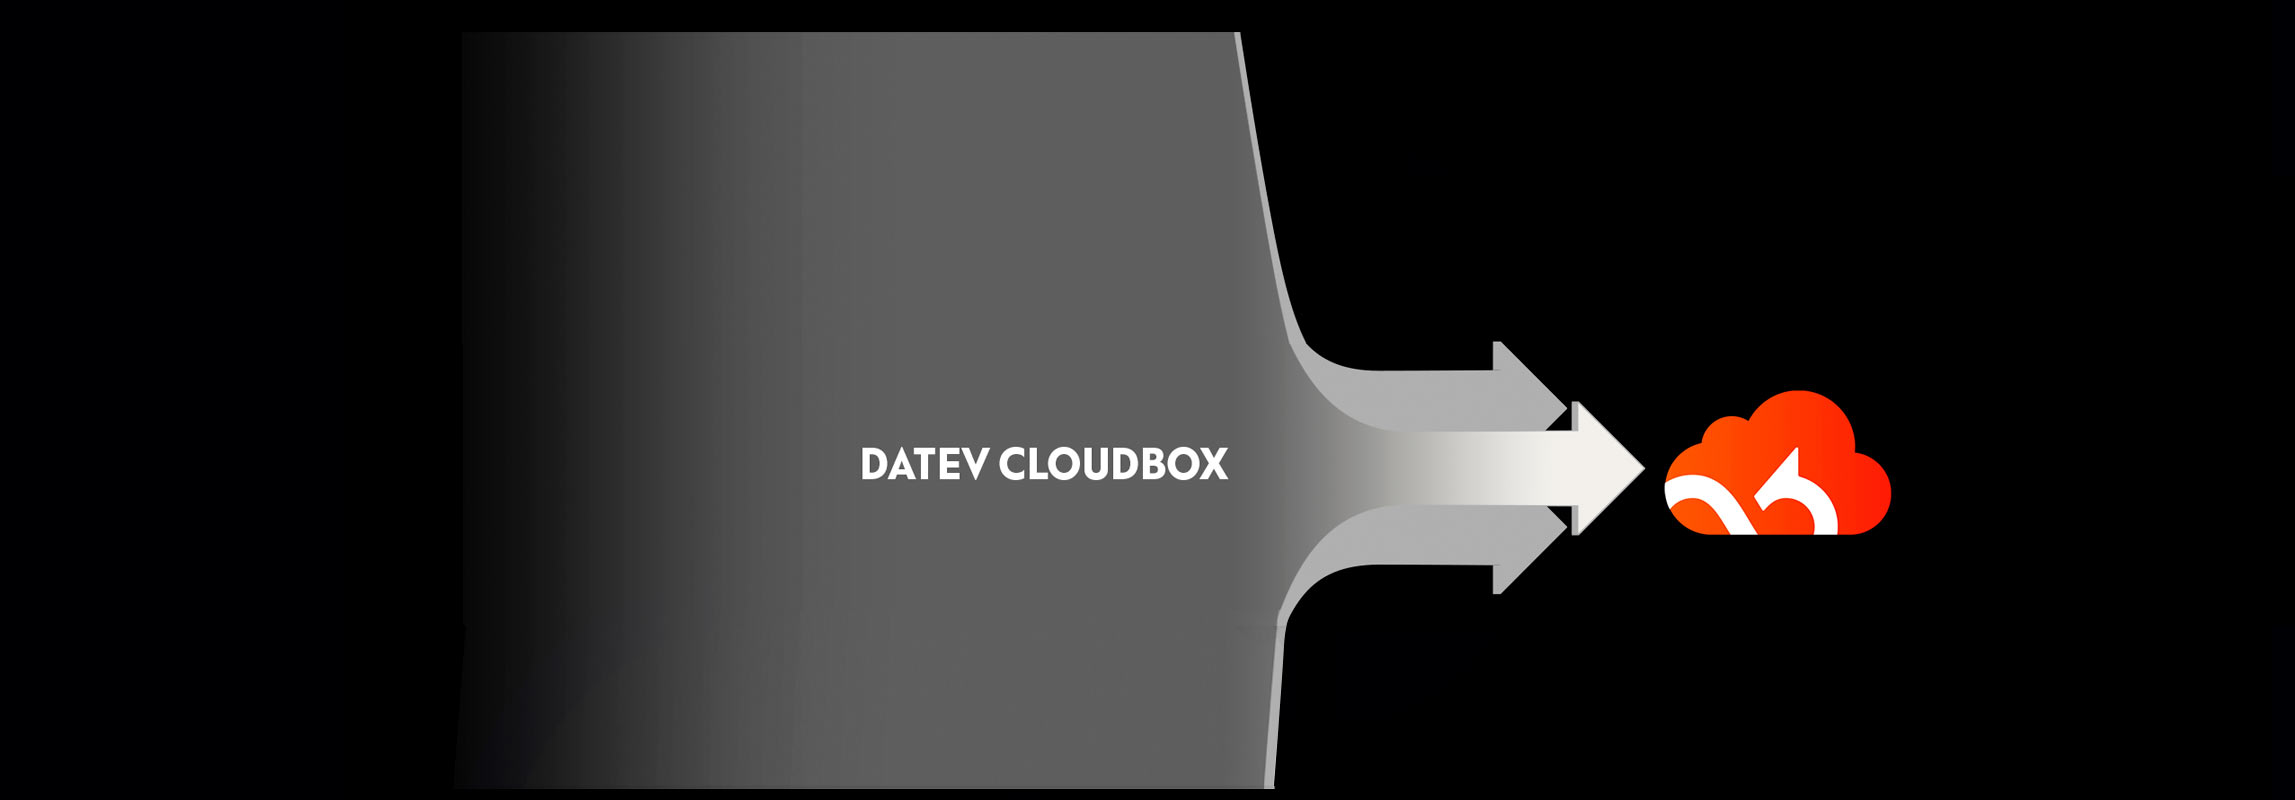 dracoon_datev-cloudbox_blog